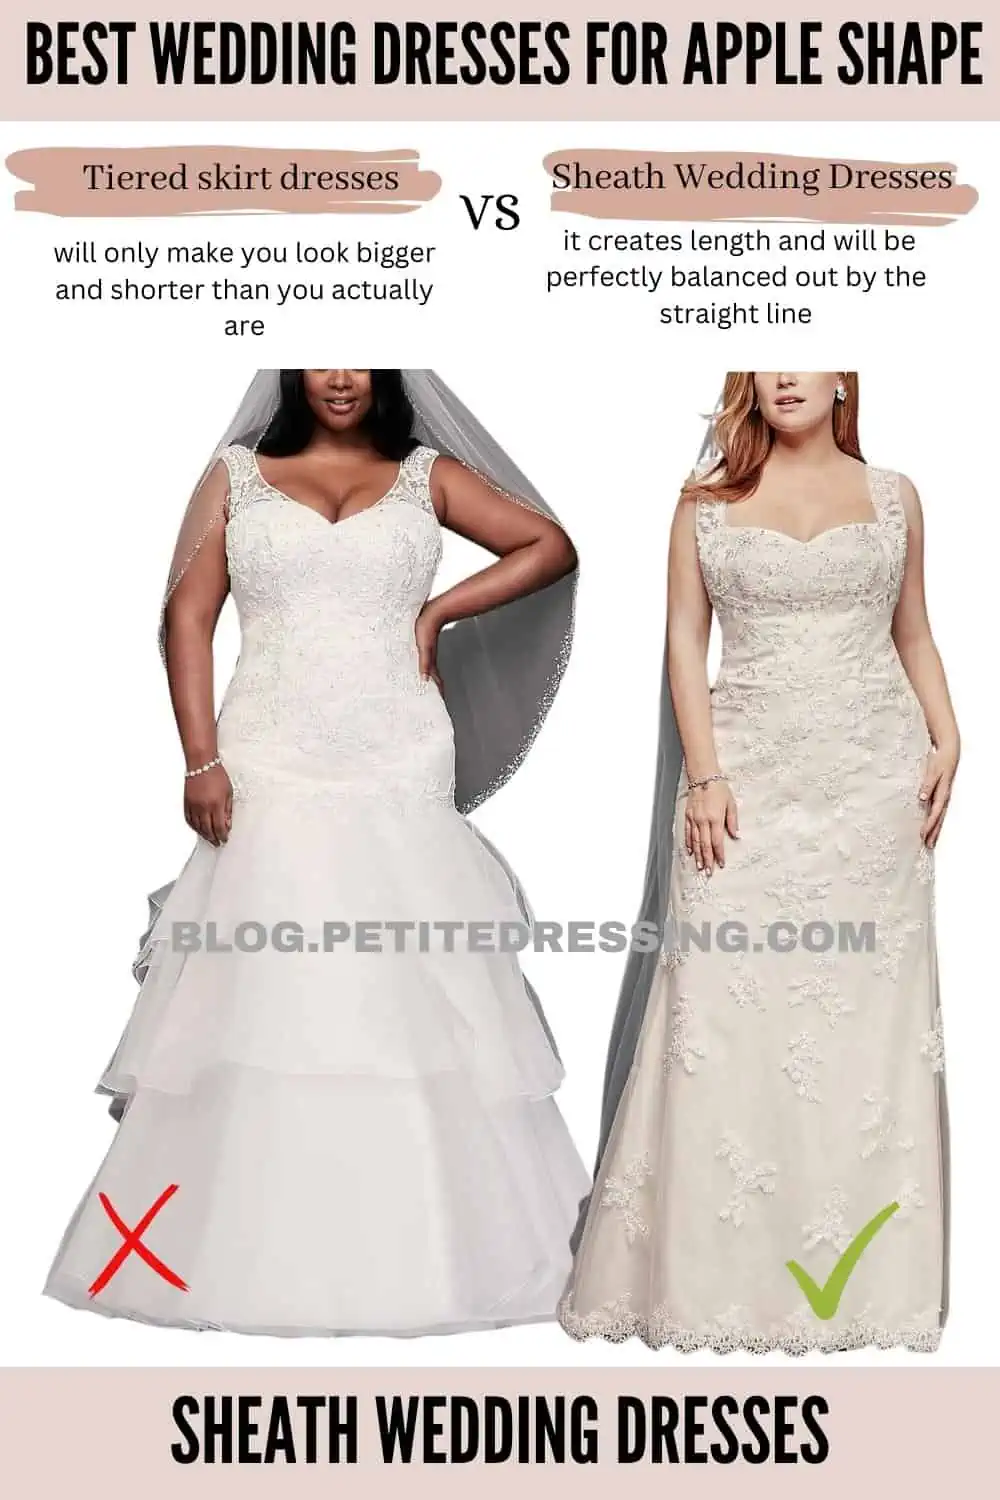 What Should I Wear Under My Wedding Dress 2022